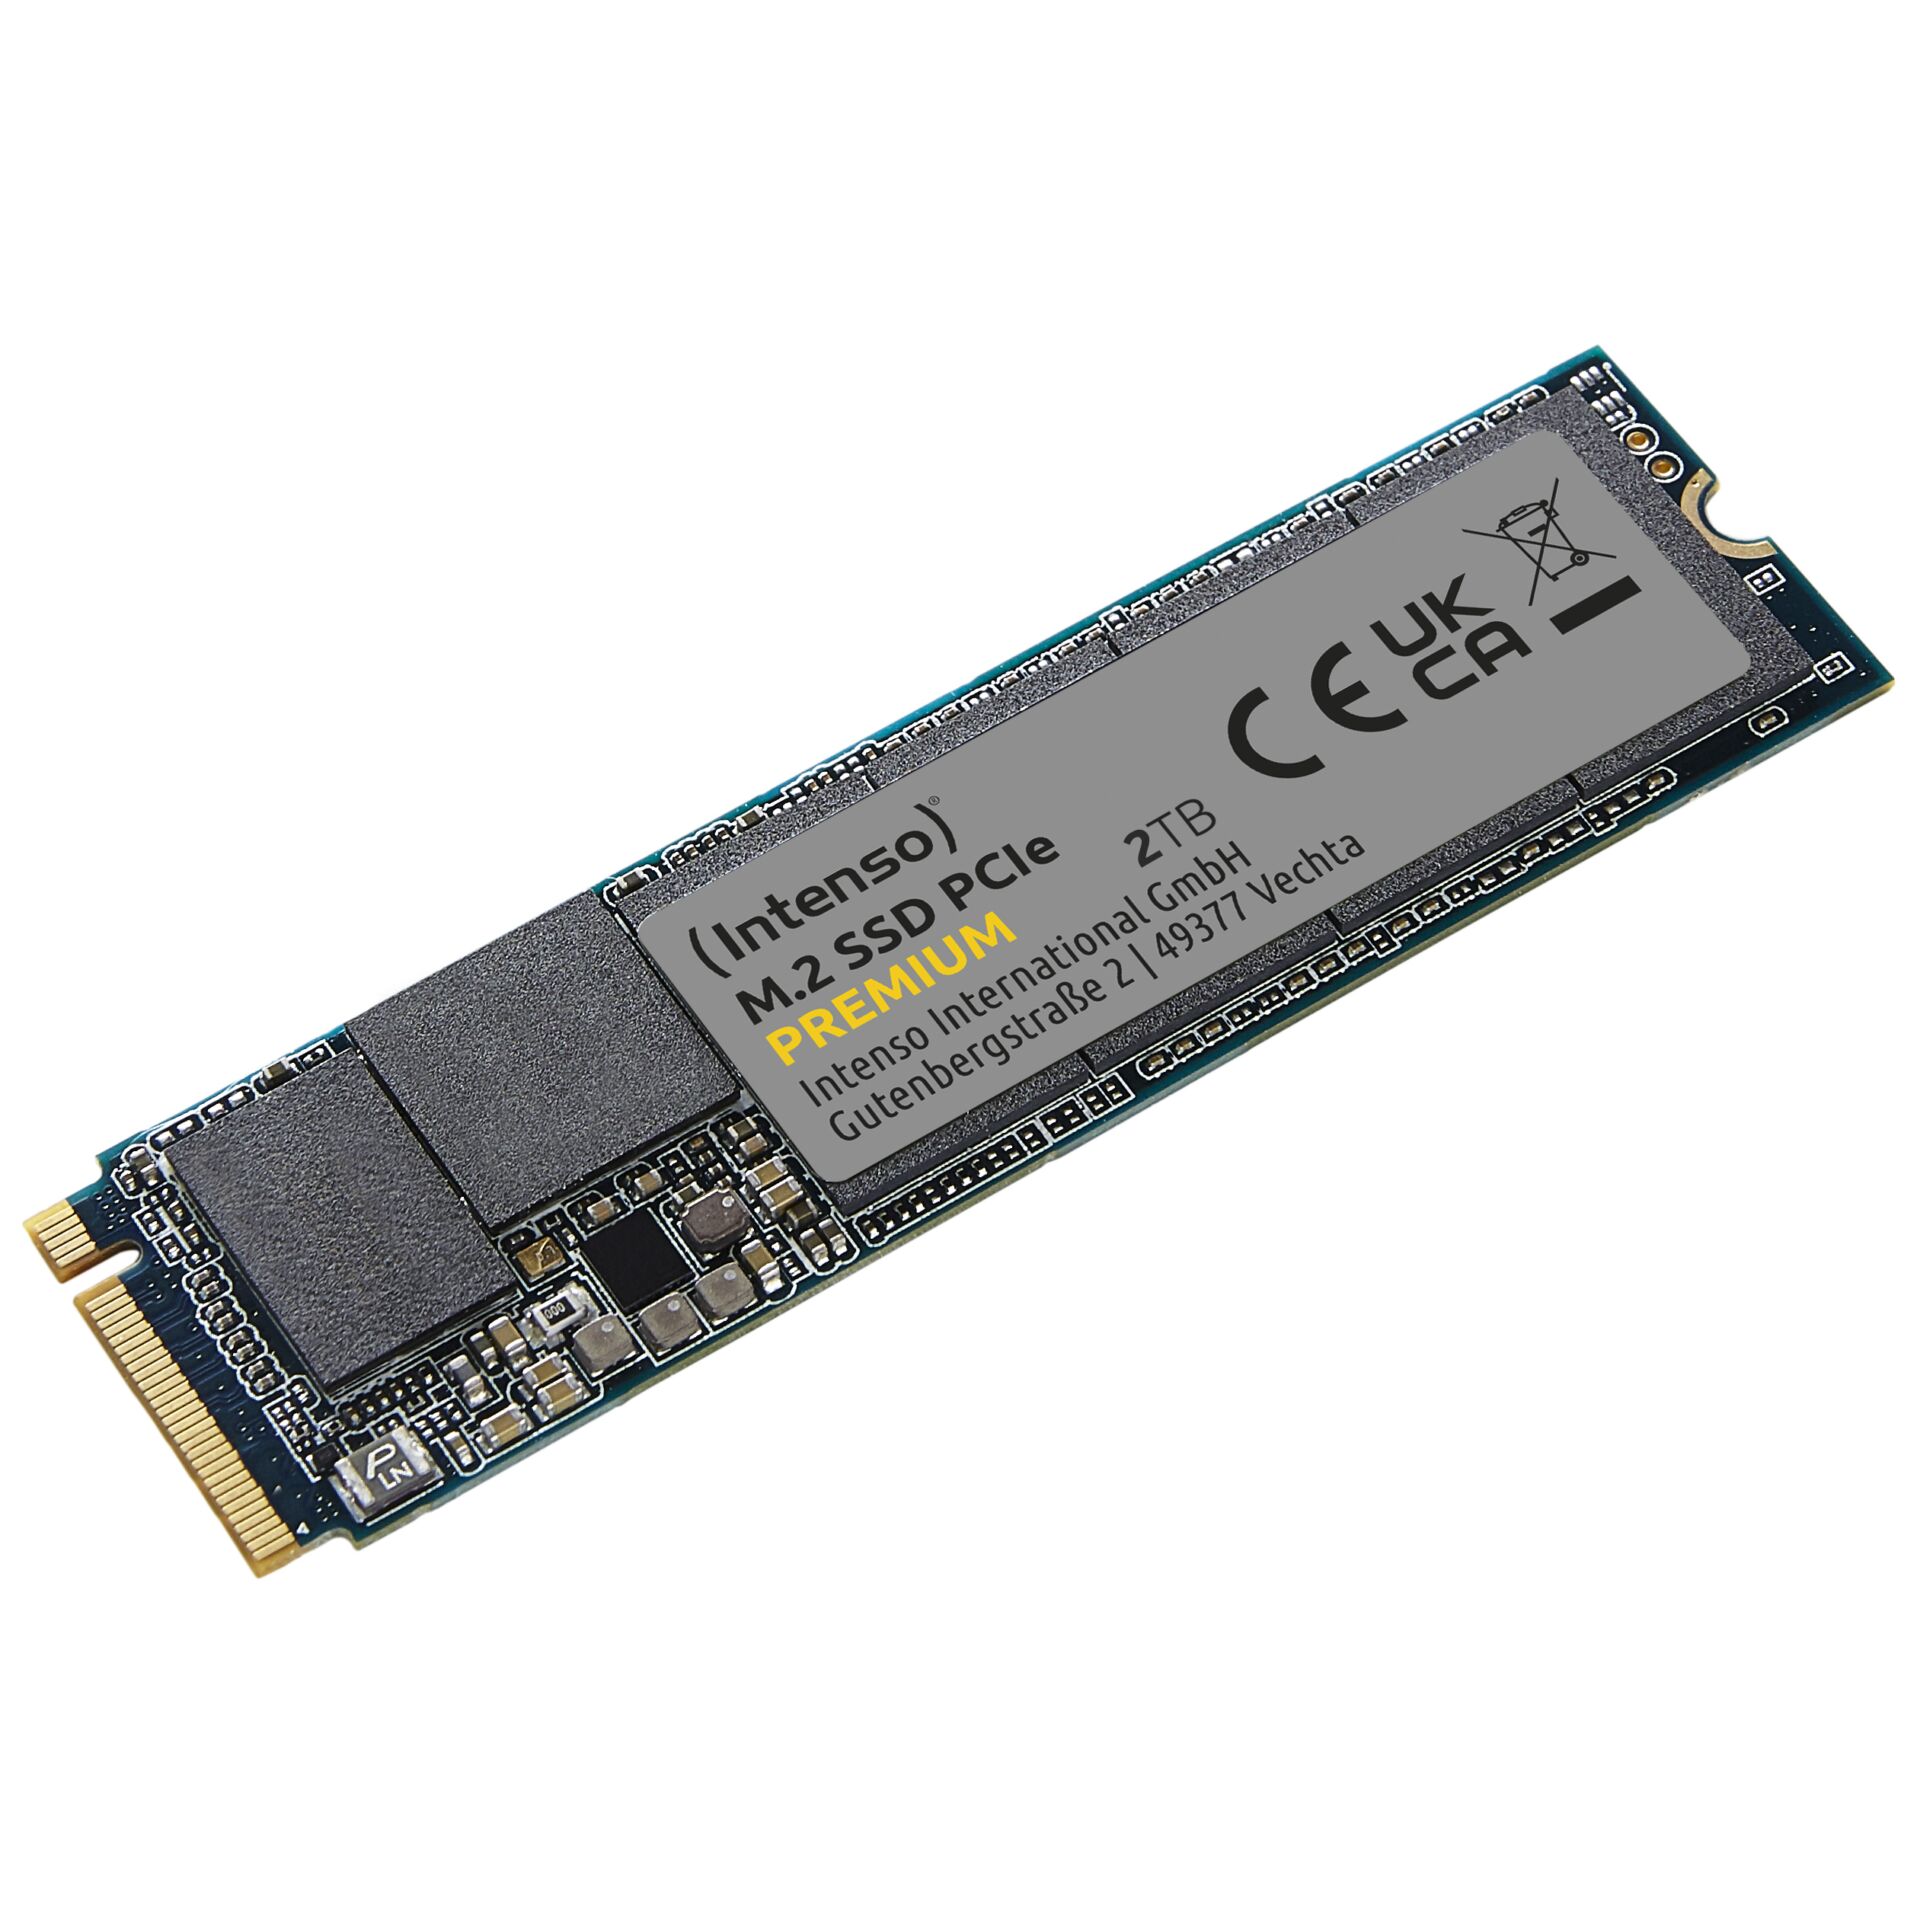 2.0 TB SSD Intenso PCIe PREMIUM SSD, M.2/M-Key (PCIe 3.0 x4), lesen: 2100MB/s, schreiben: 1700MB/s, TBW: 1.2PB